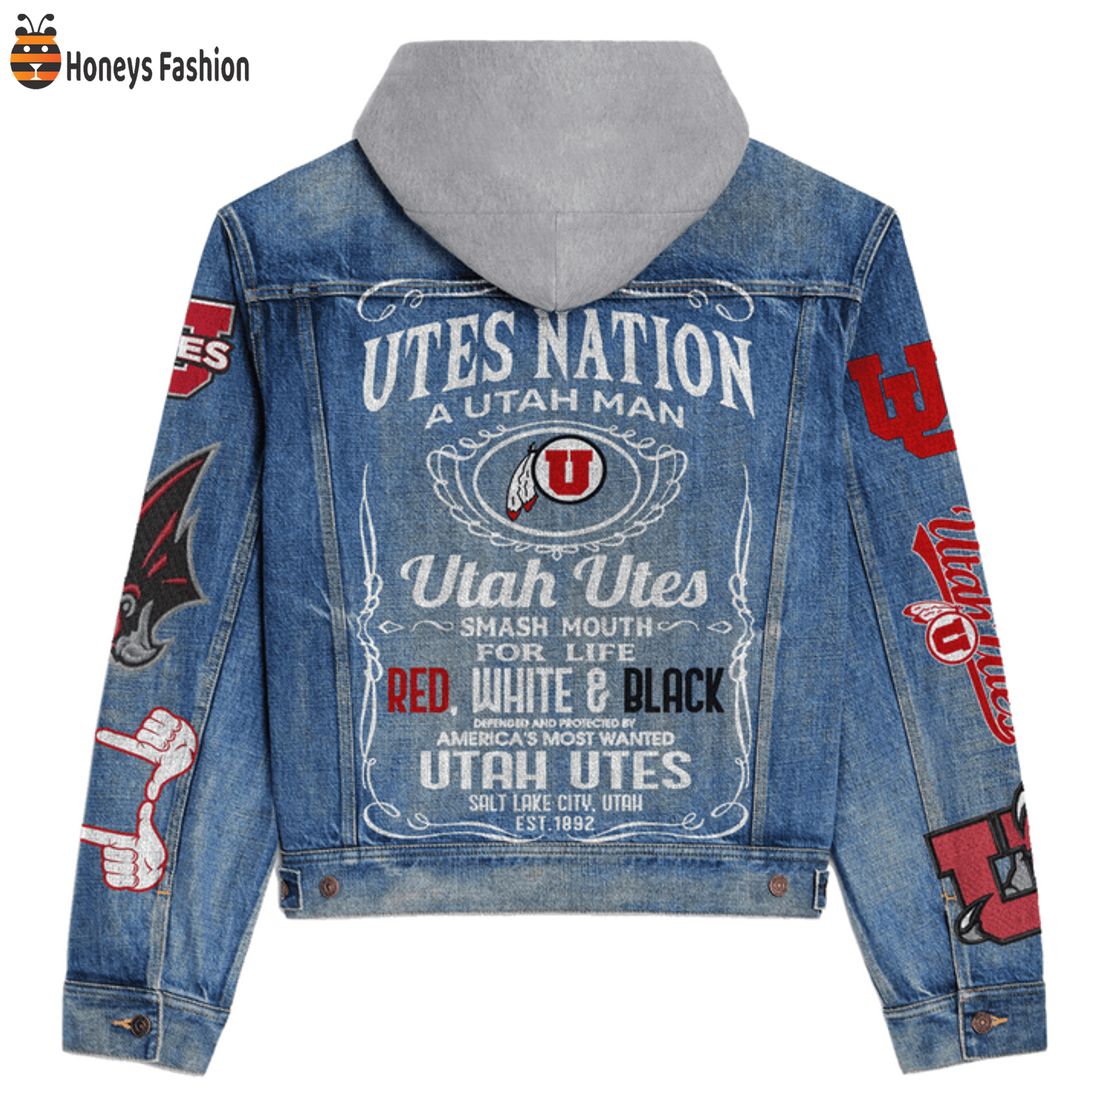 NEW Utah Utes Nation A Utah Man Hooded Denim Jacket